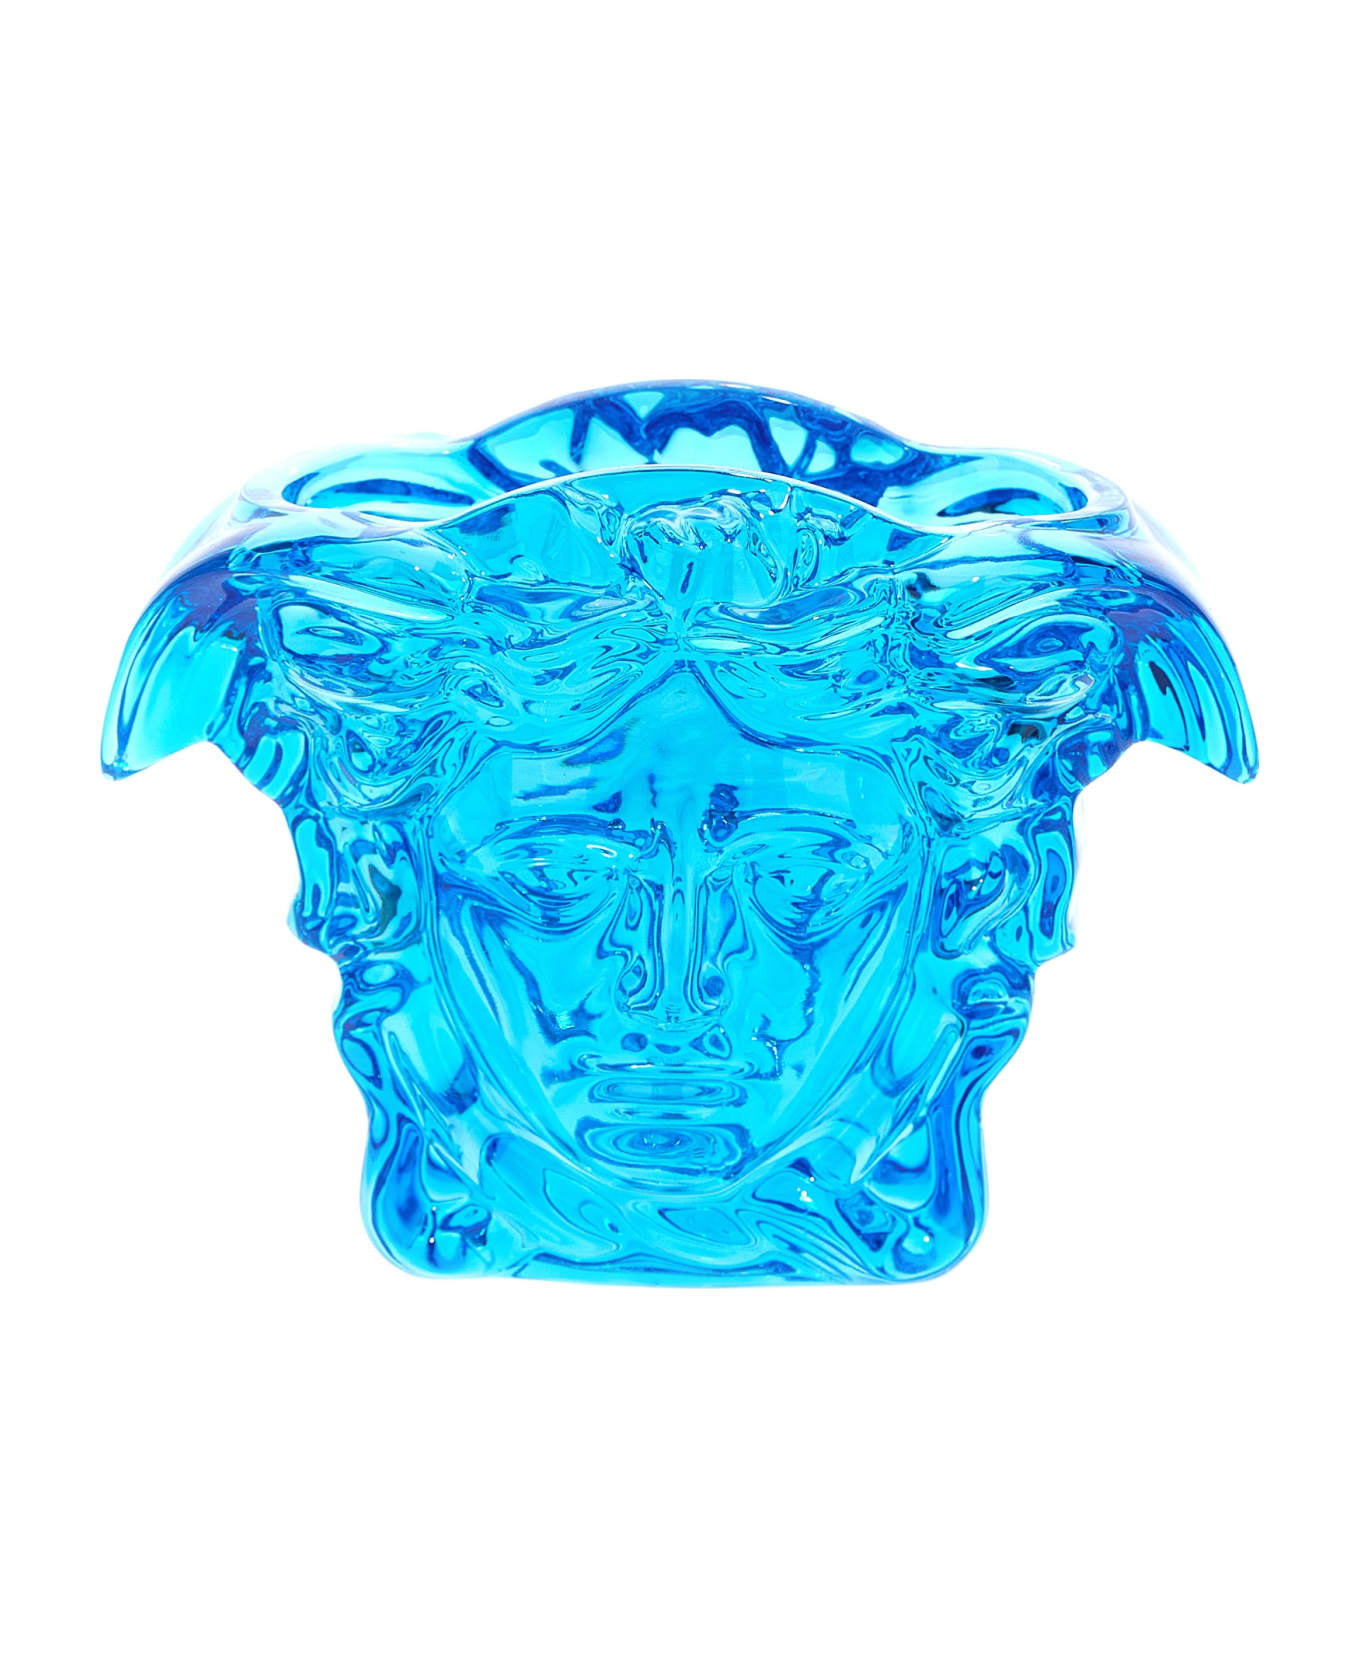 Versace 'medusa' Vase Large - Light Blue インテリア雑貨